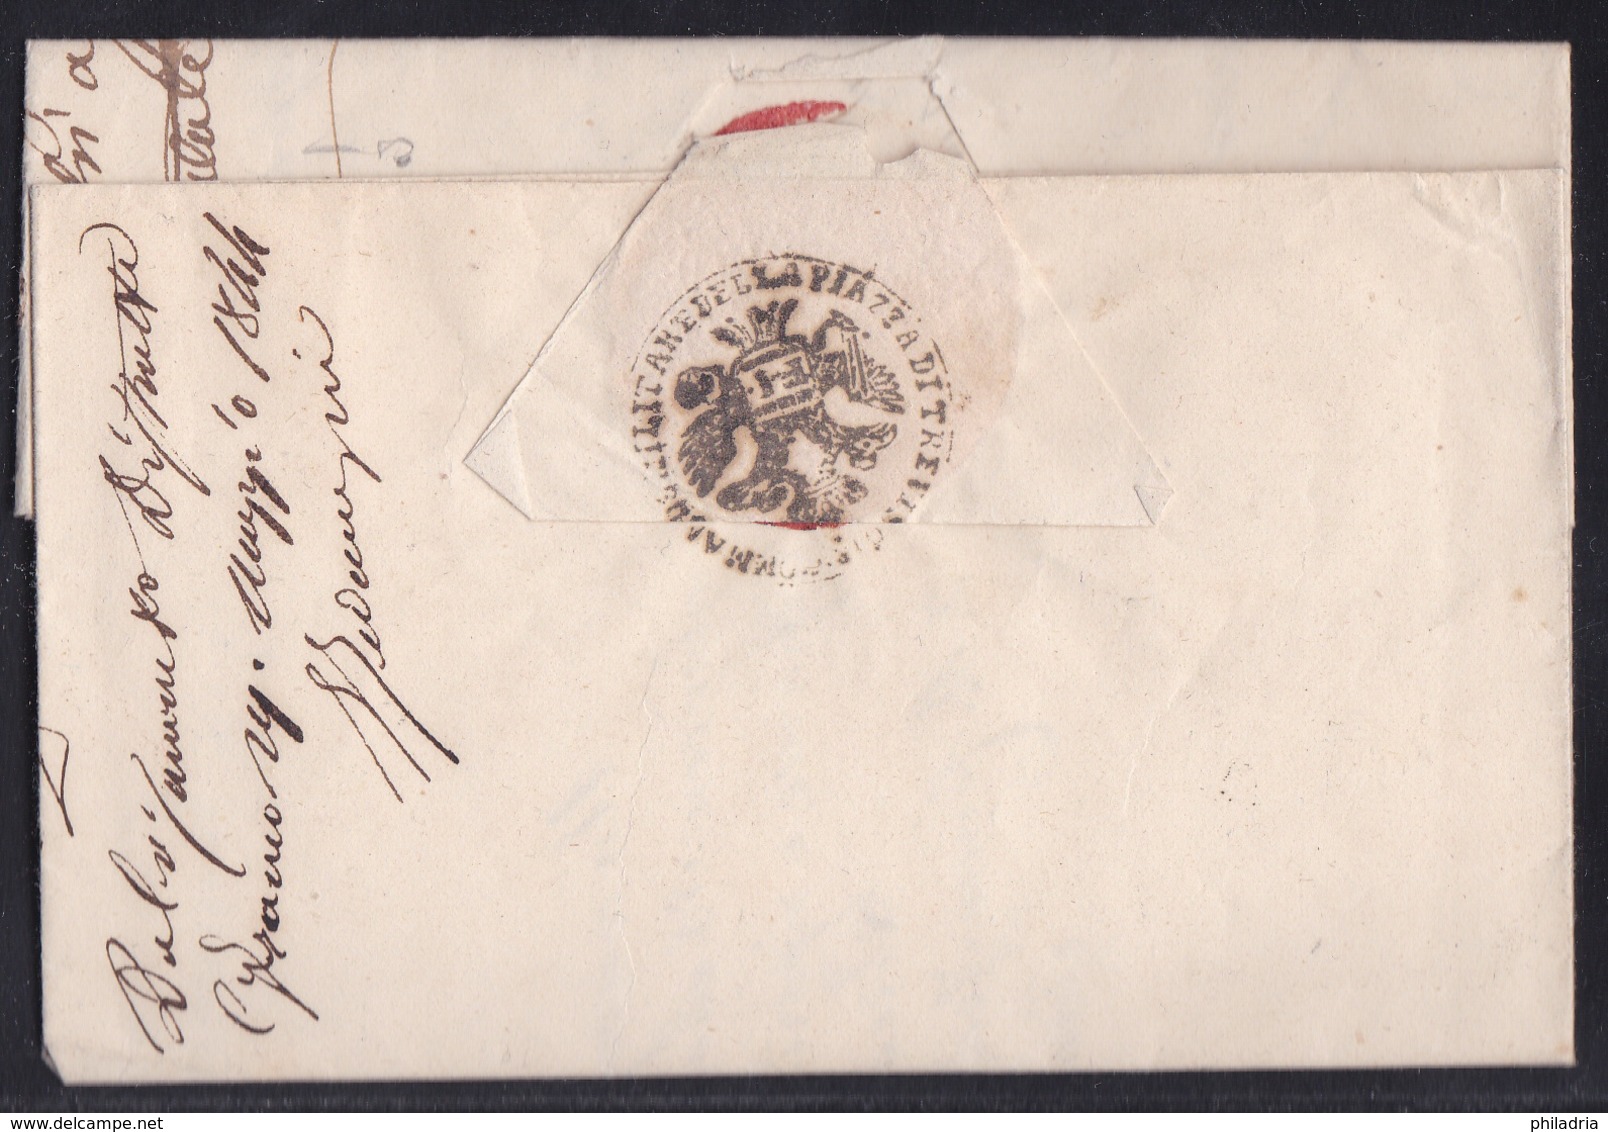 TREVISO, Complete Prephilatelic Letter, 1844 - ...-1850 Voorfilatelie